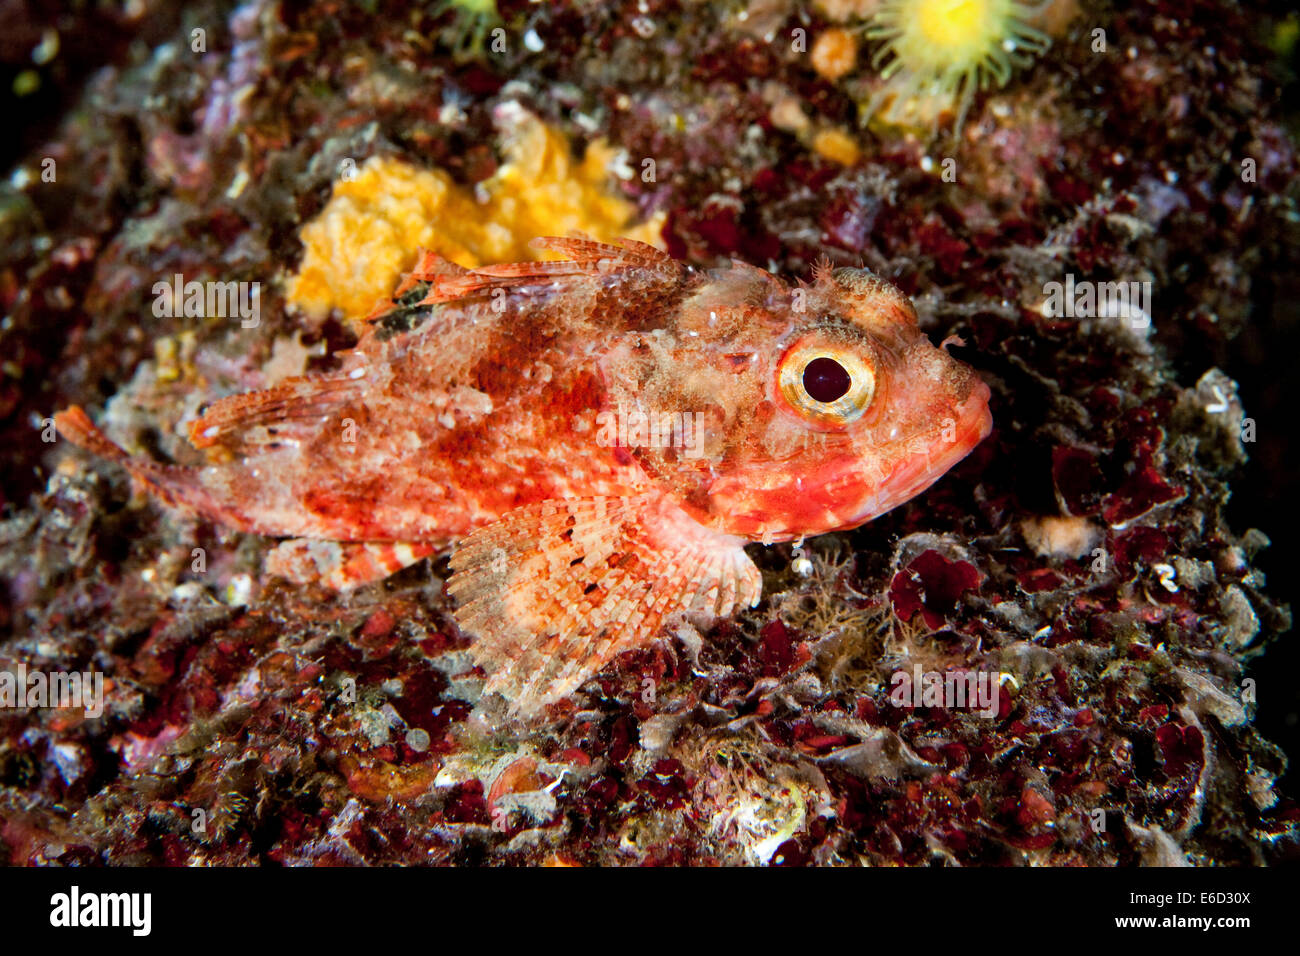 Small red scorpionfish (Scorpaena notata), Mediterranean Sea, Croatia Stock Photo